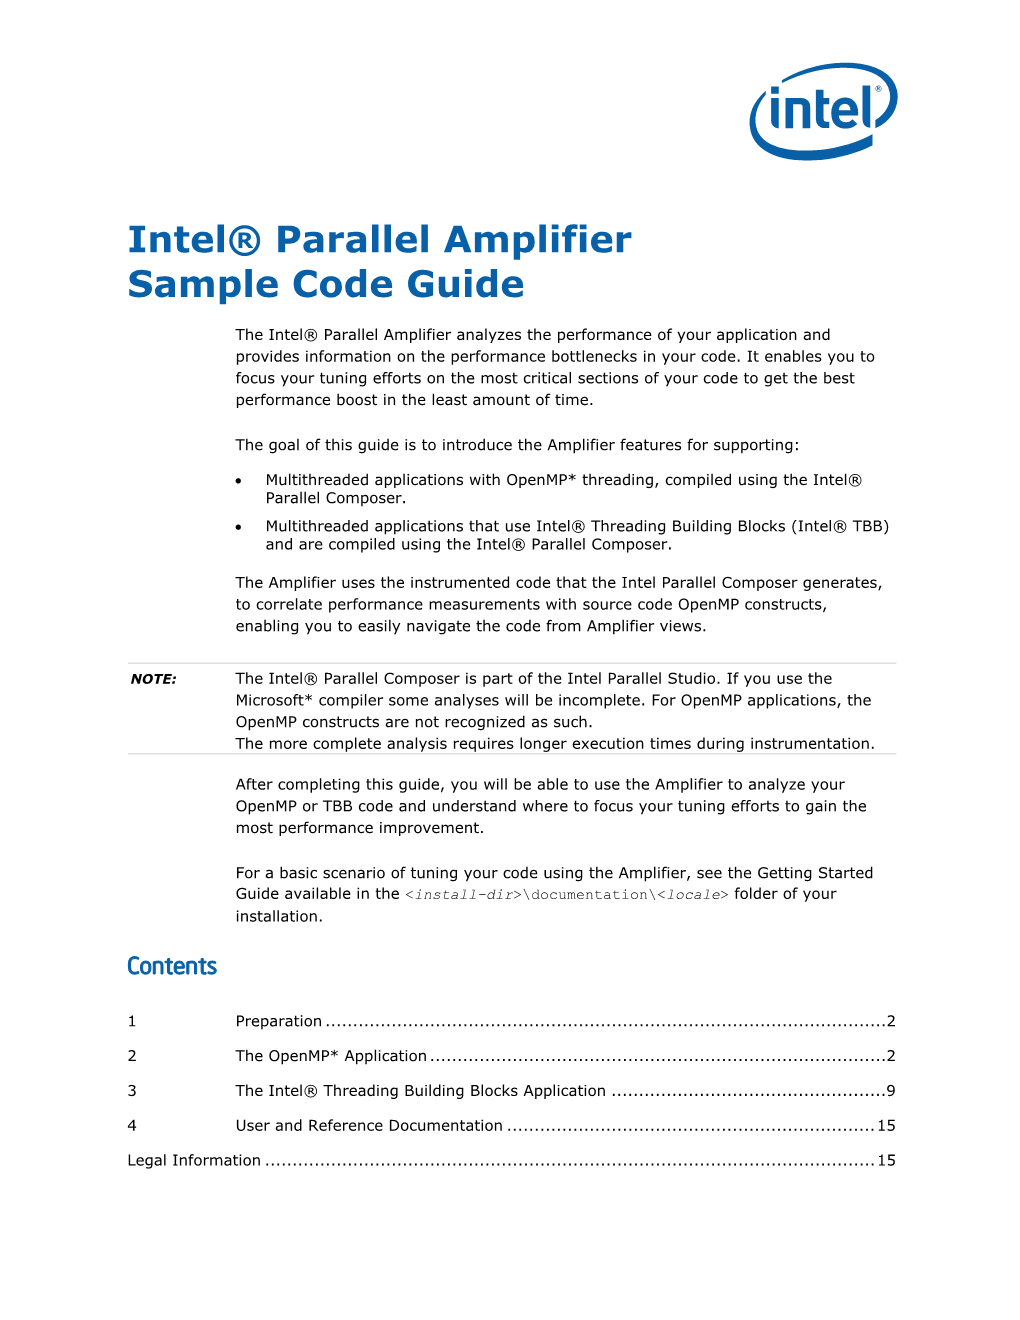 Intel® Parallel Amplifier Sample Code Guide